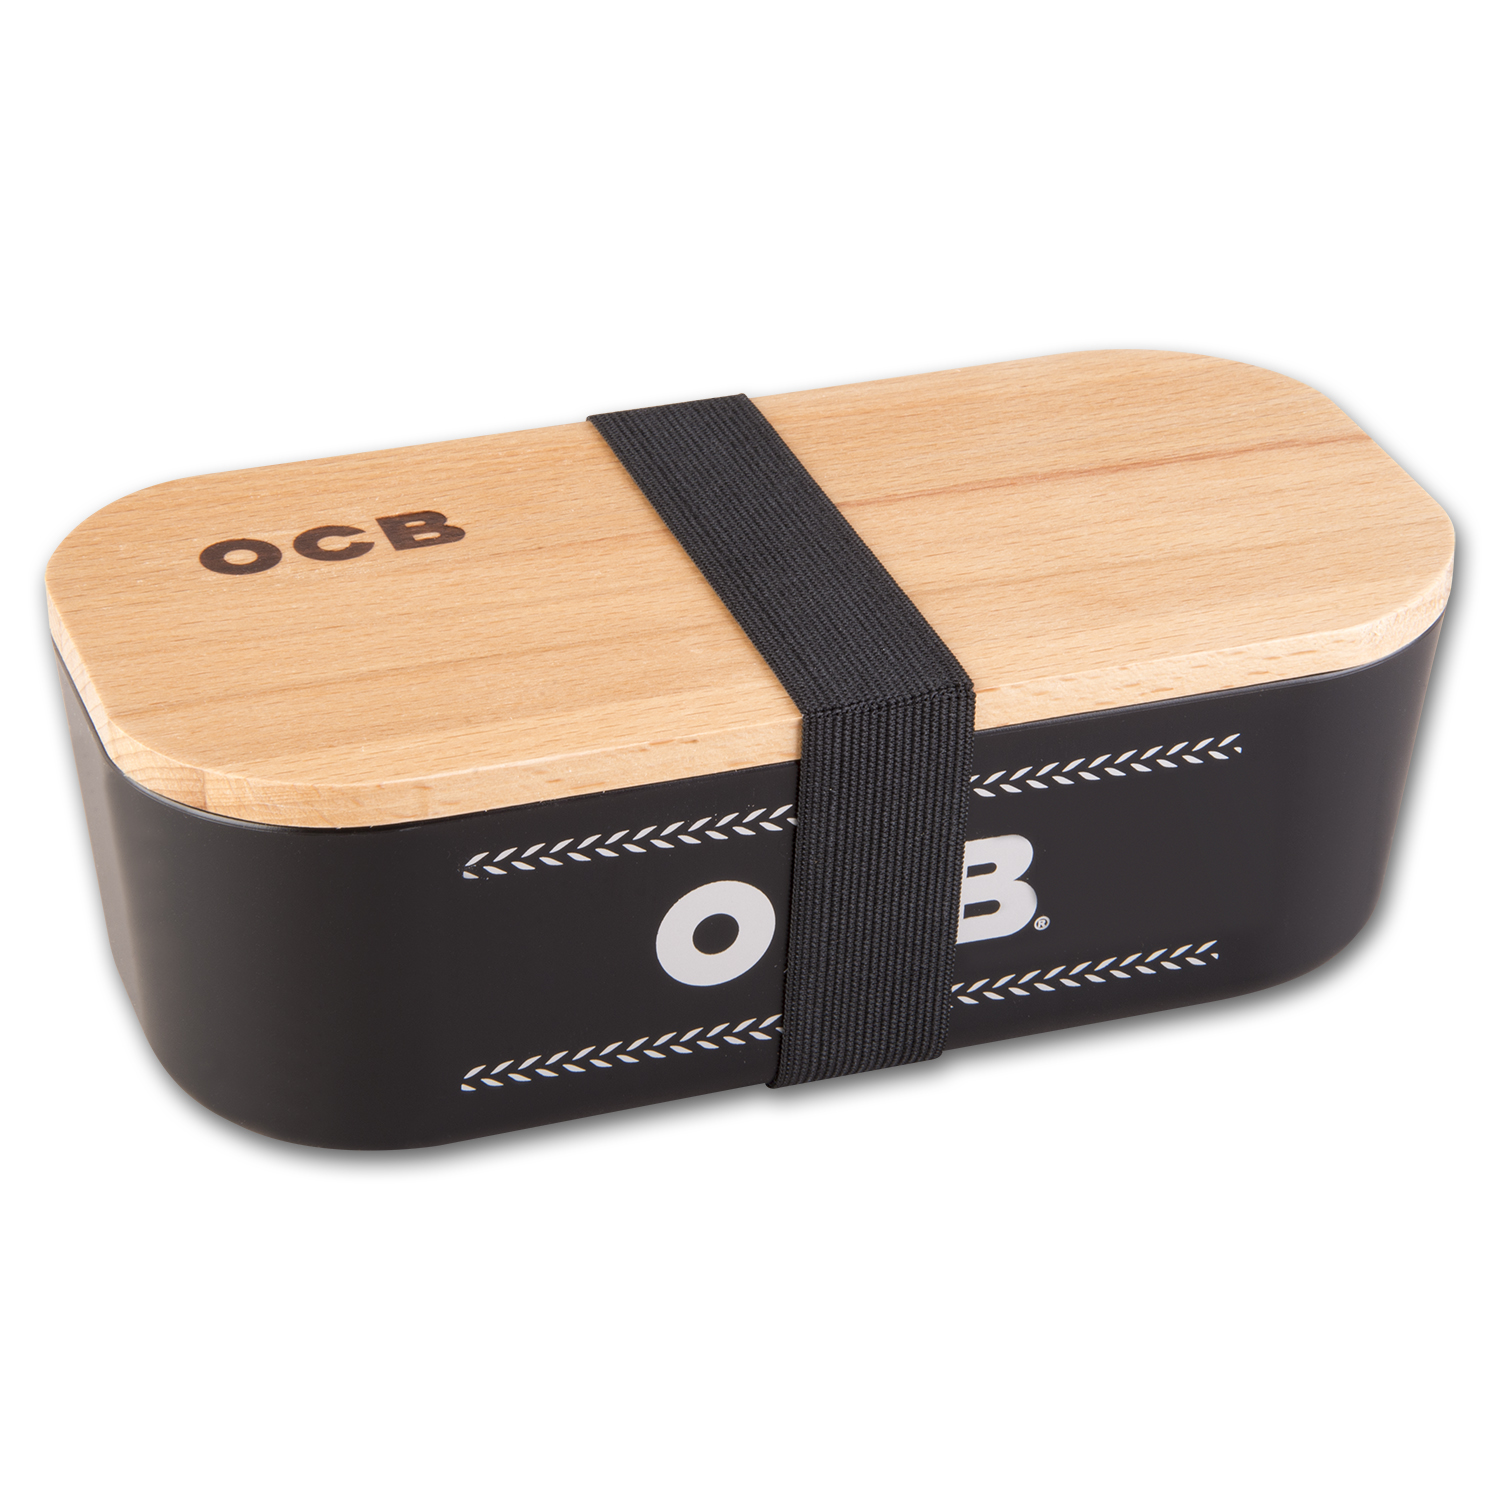 OCB Rolling Box inklusive Tray + Wunschgravur Gratis